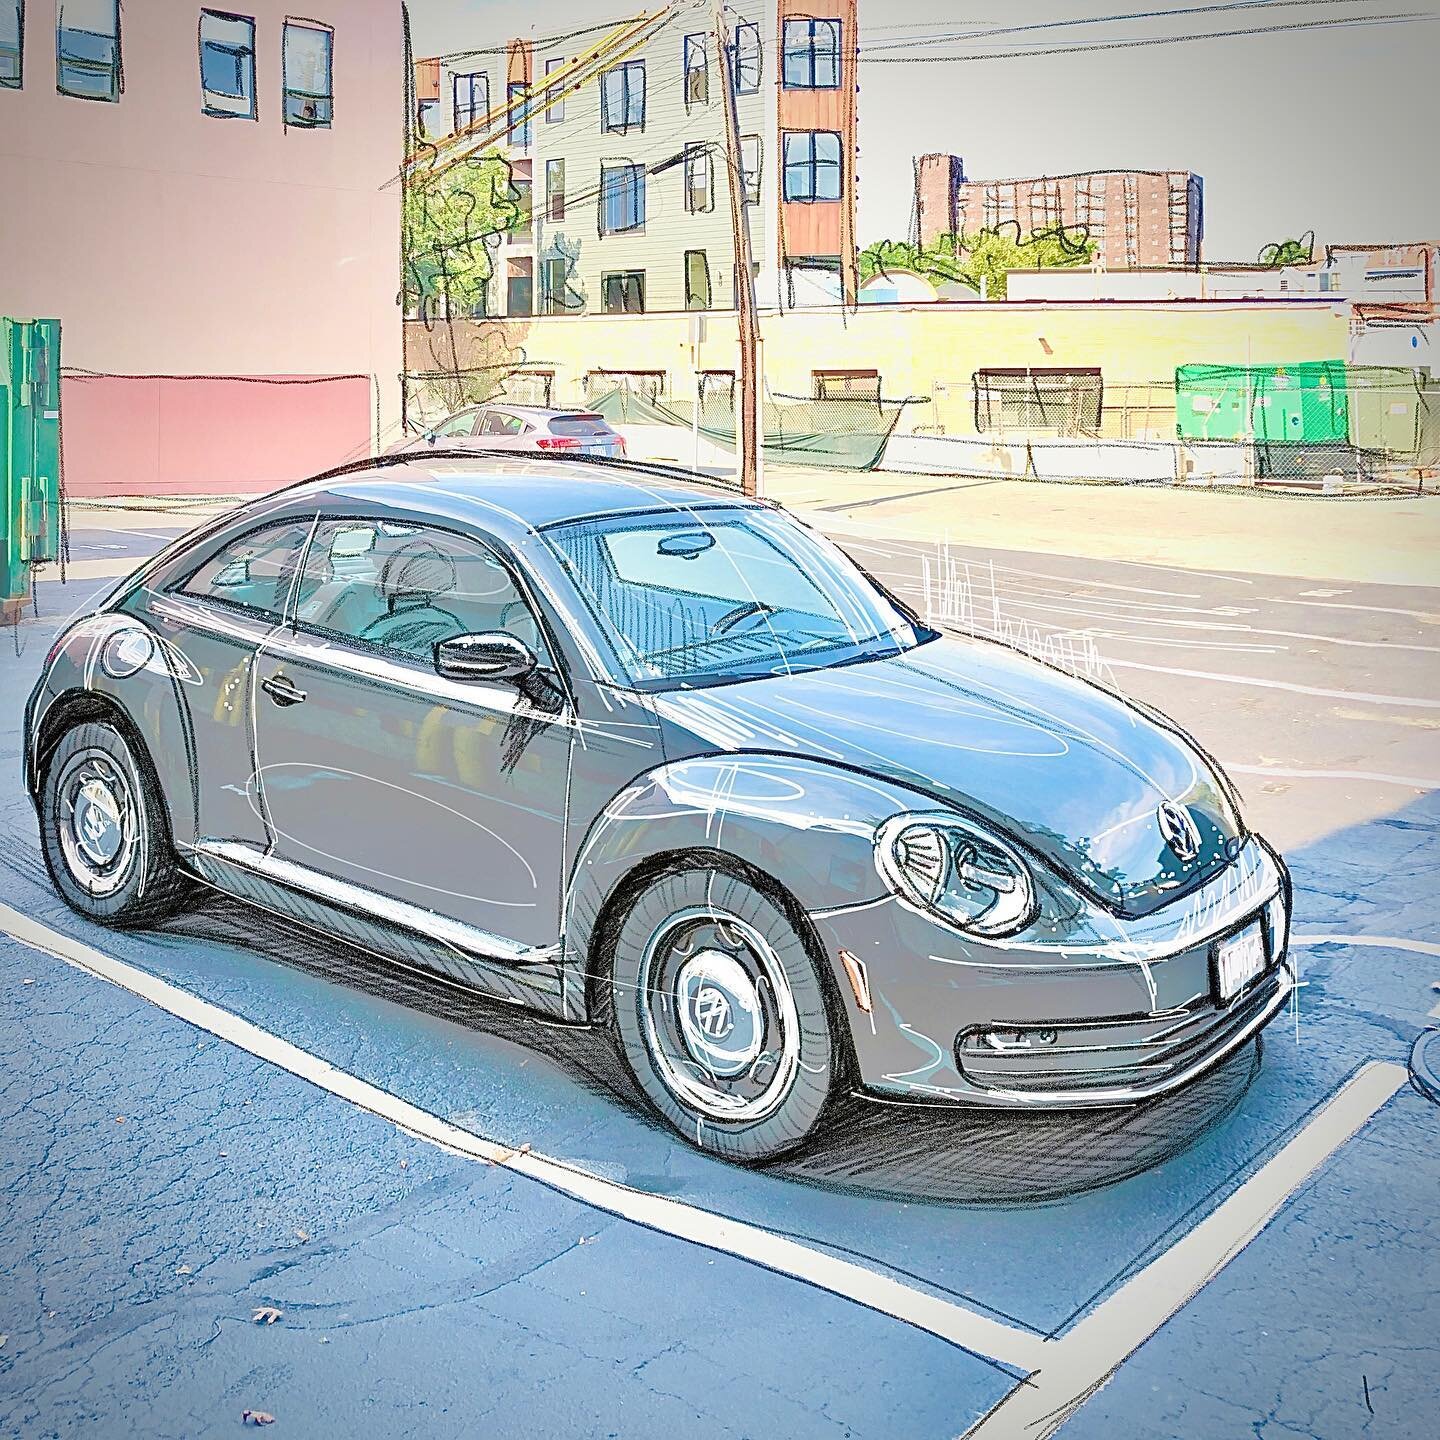 VW New Beetle #car #vwbeetle #streetphotography  #dailyart #sketch #sketchbook #streetart #vwlife